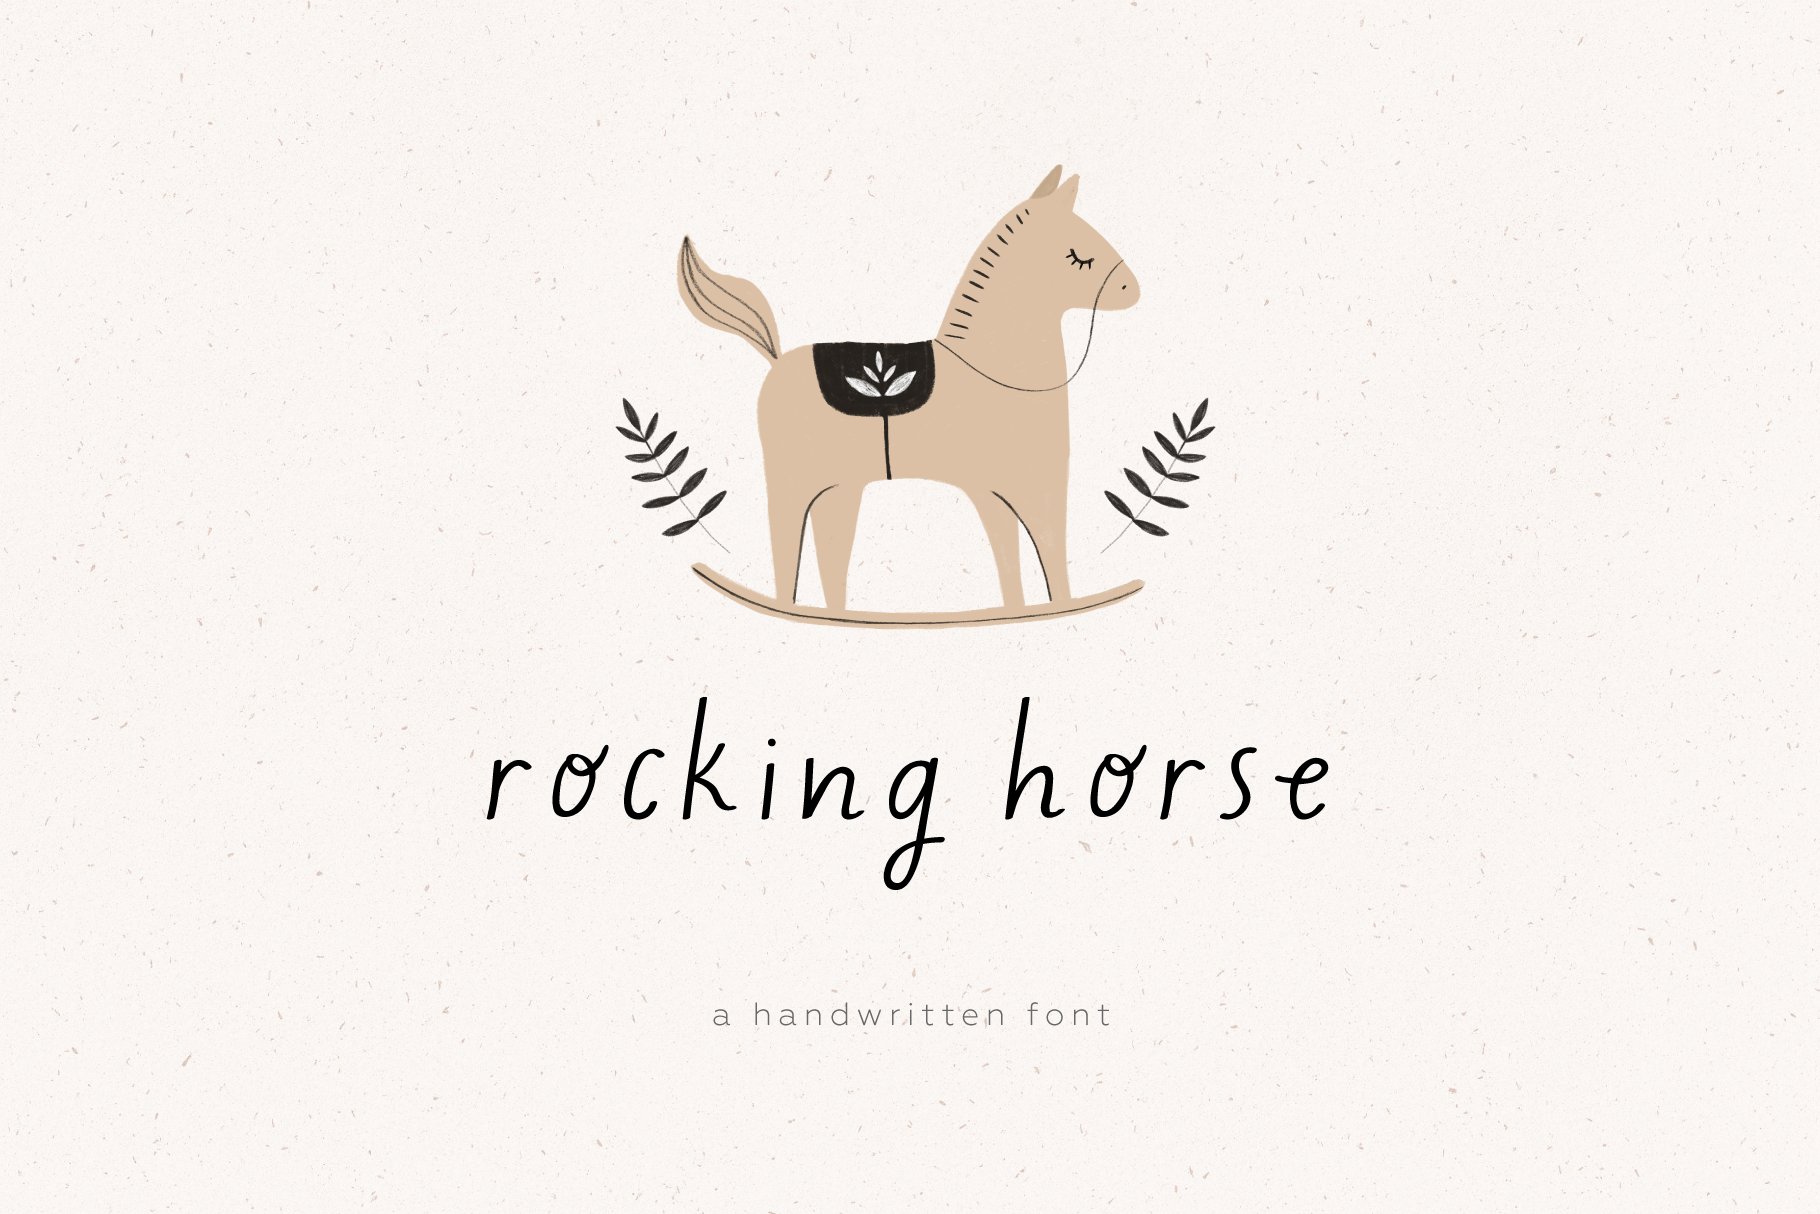 Rocking horse | Handwritten Font cover image.